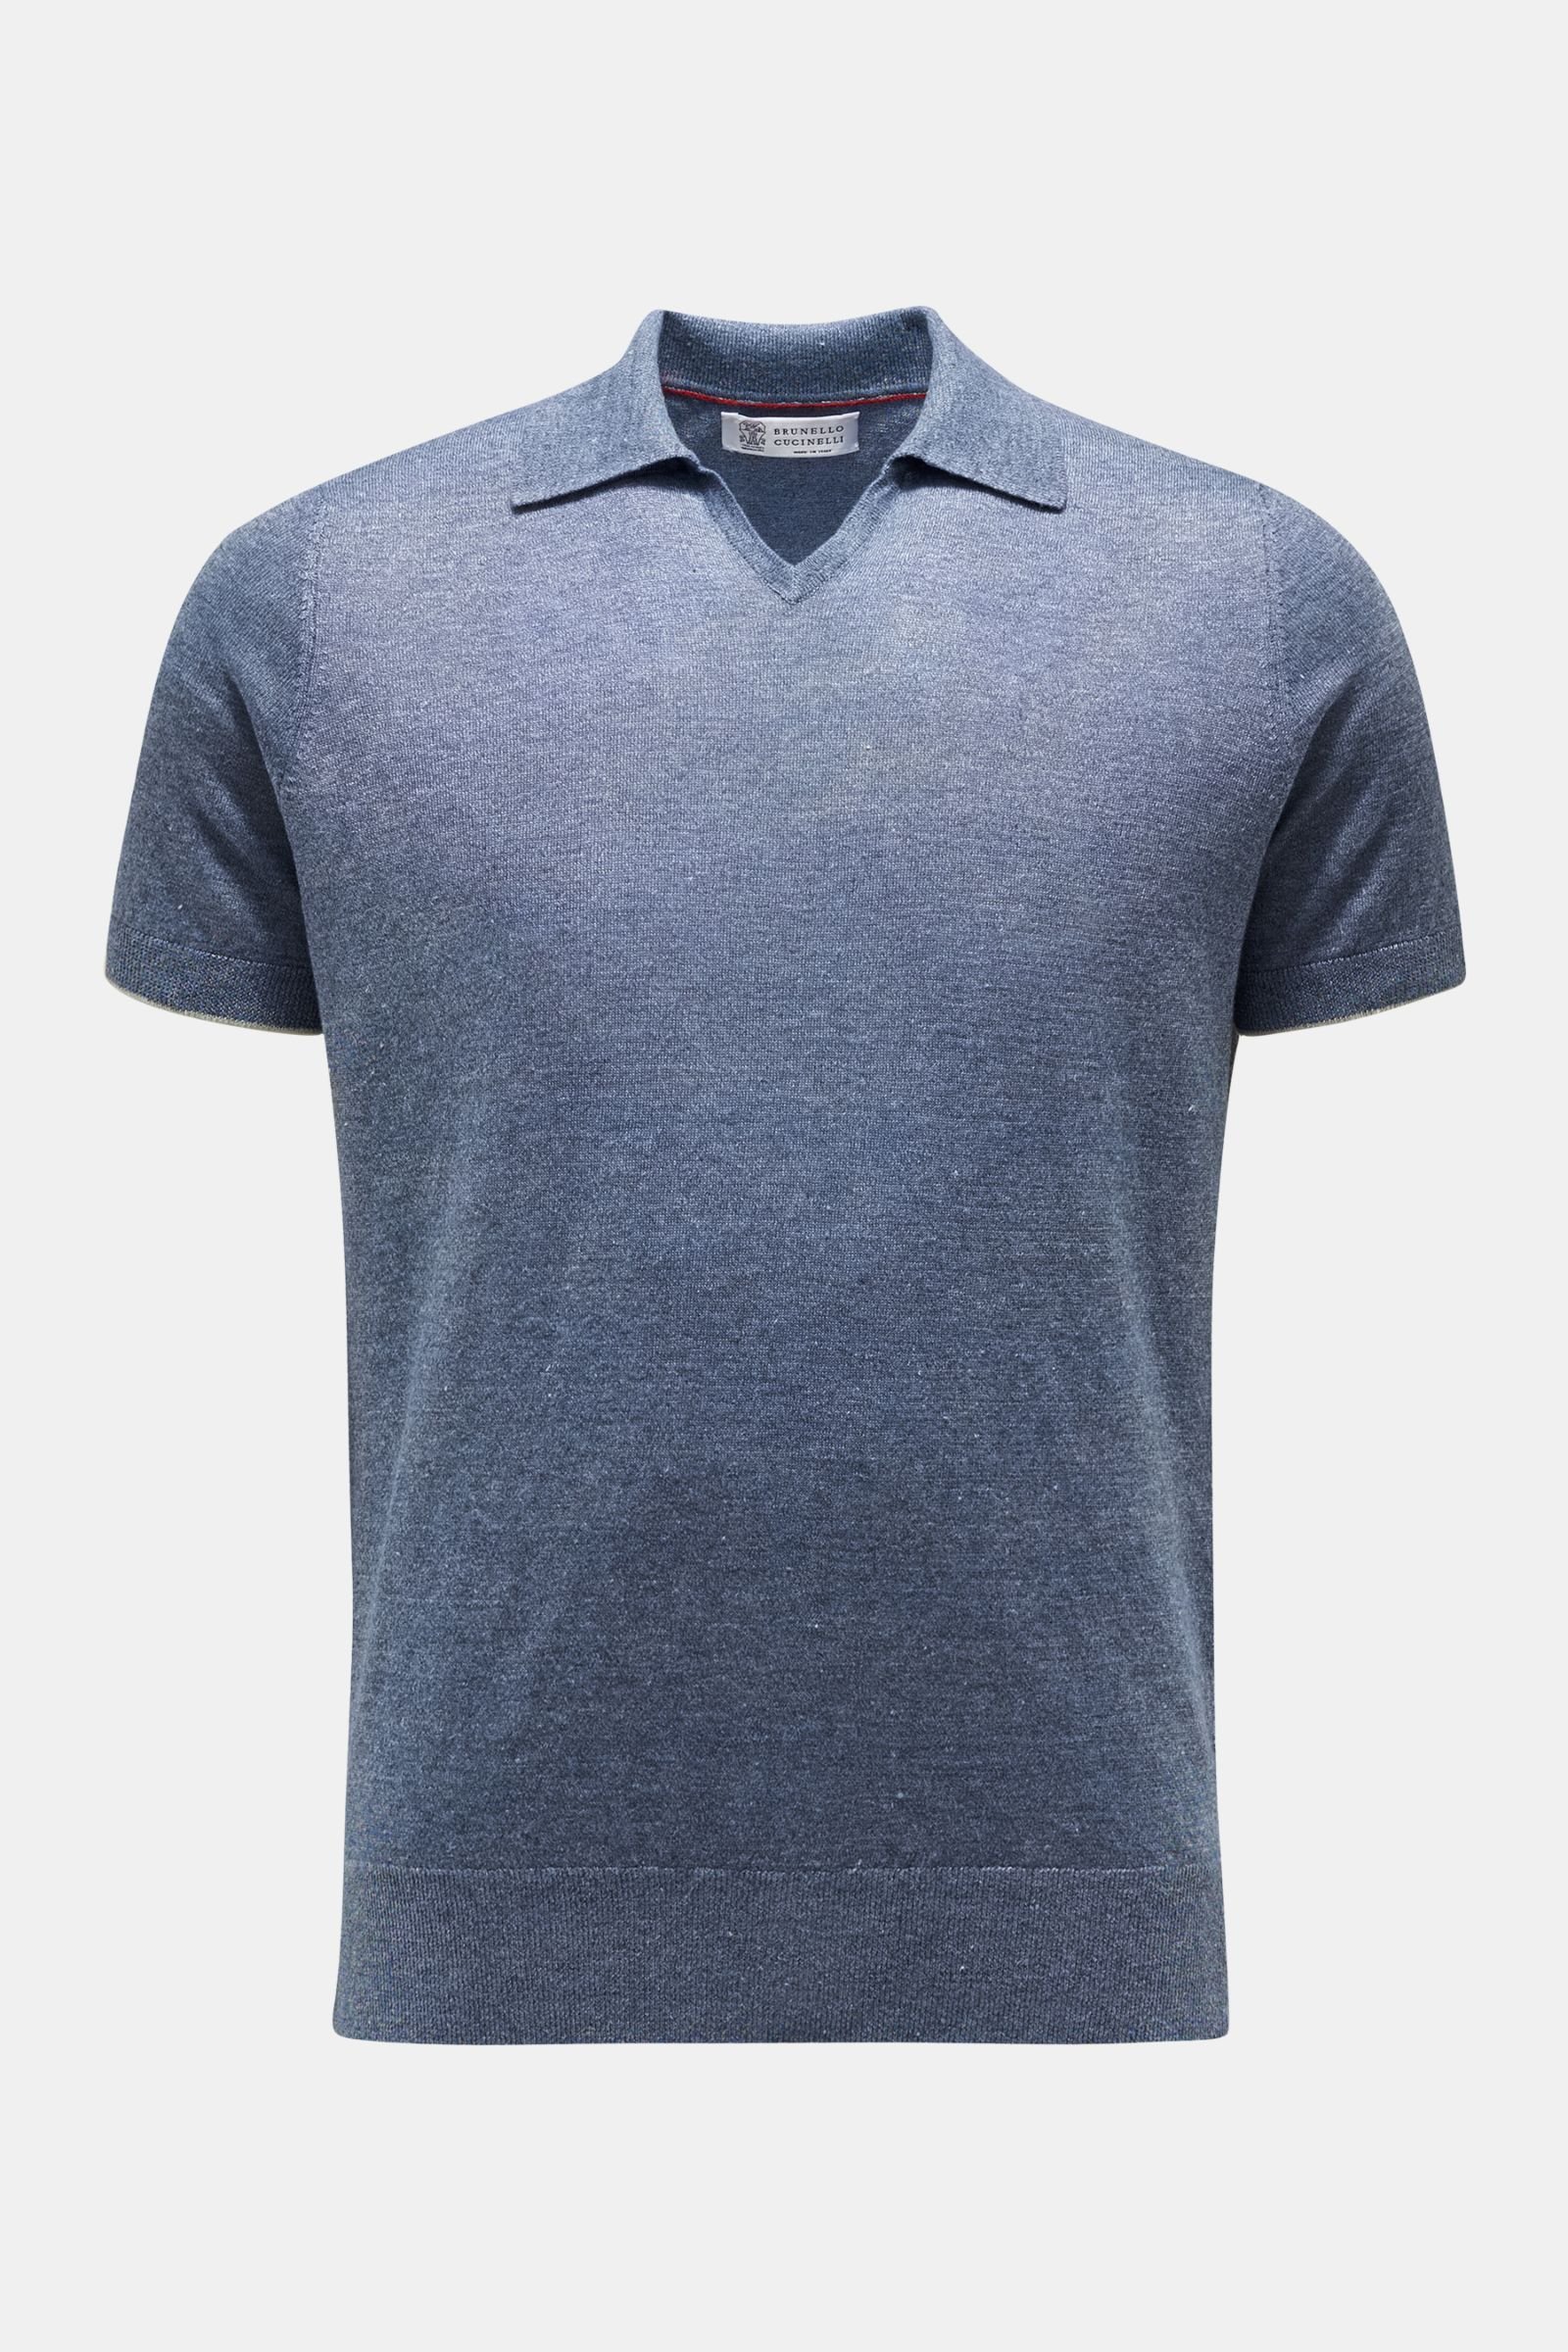 Short sleeve knit polo grey-blue